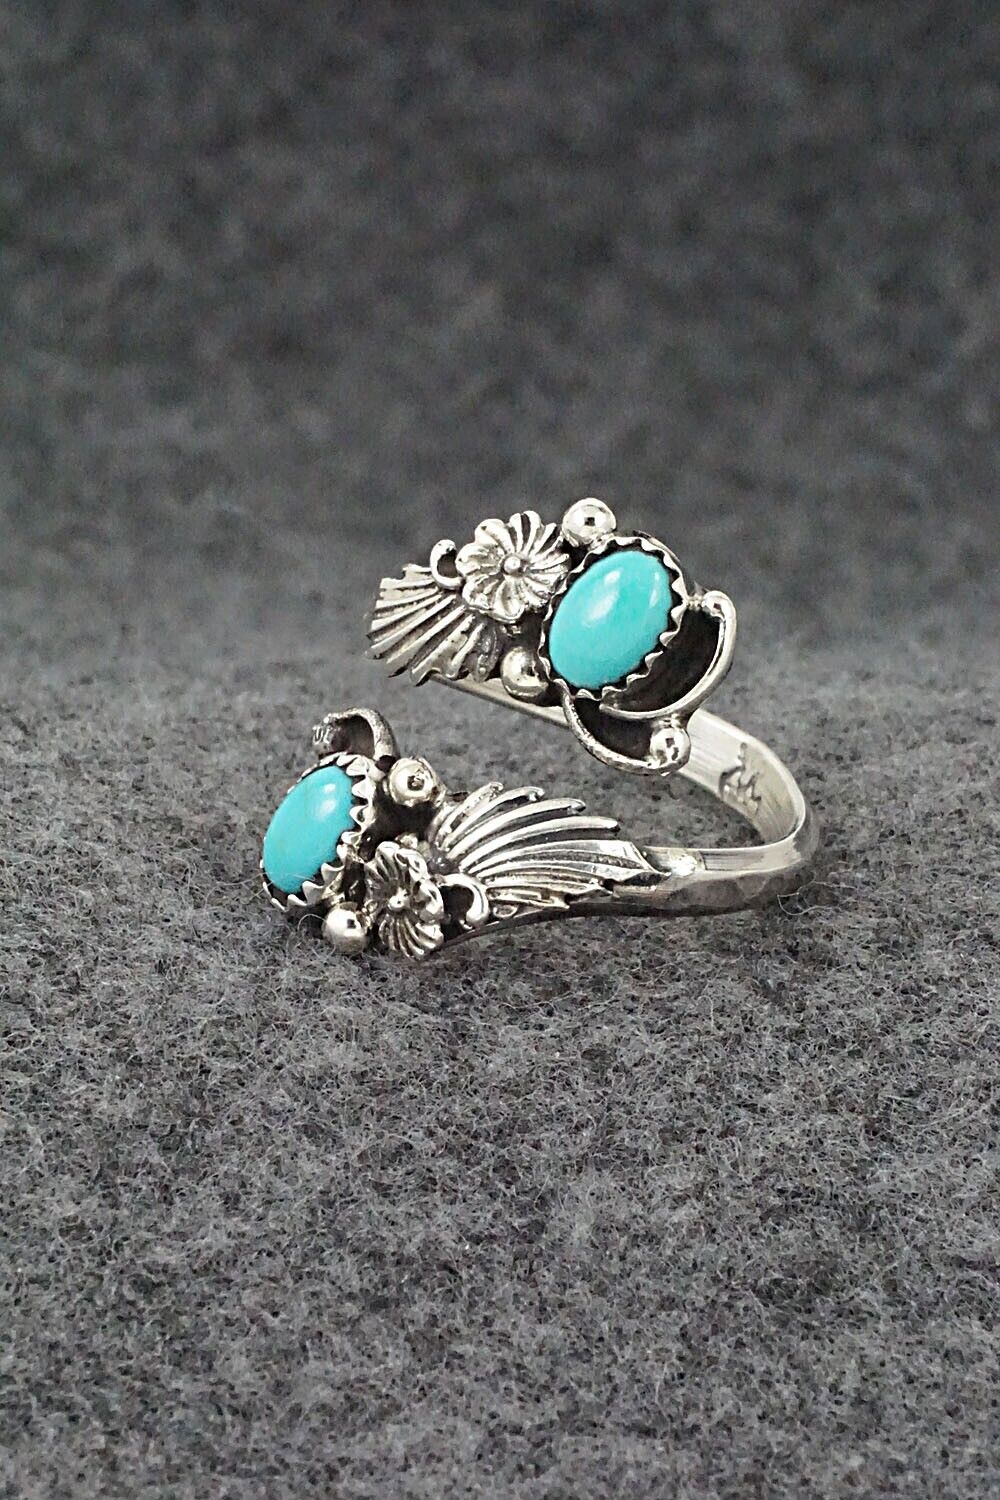 Turquoise & Sterling Silver Ring - Etta Belin - Size 8.75